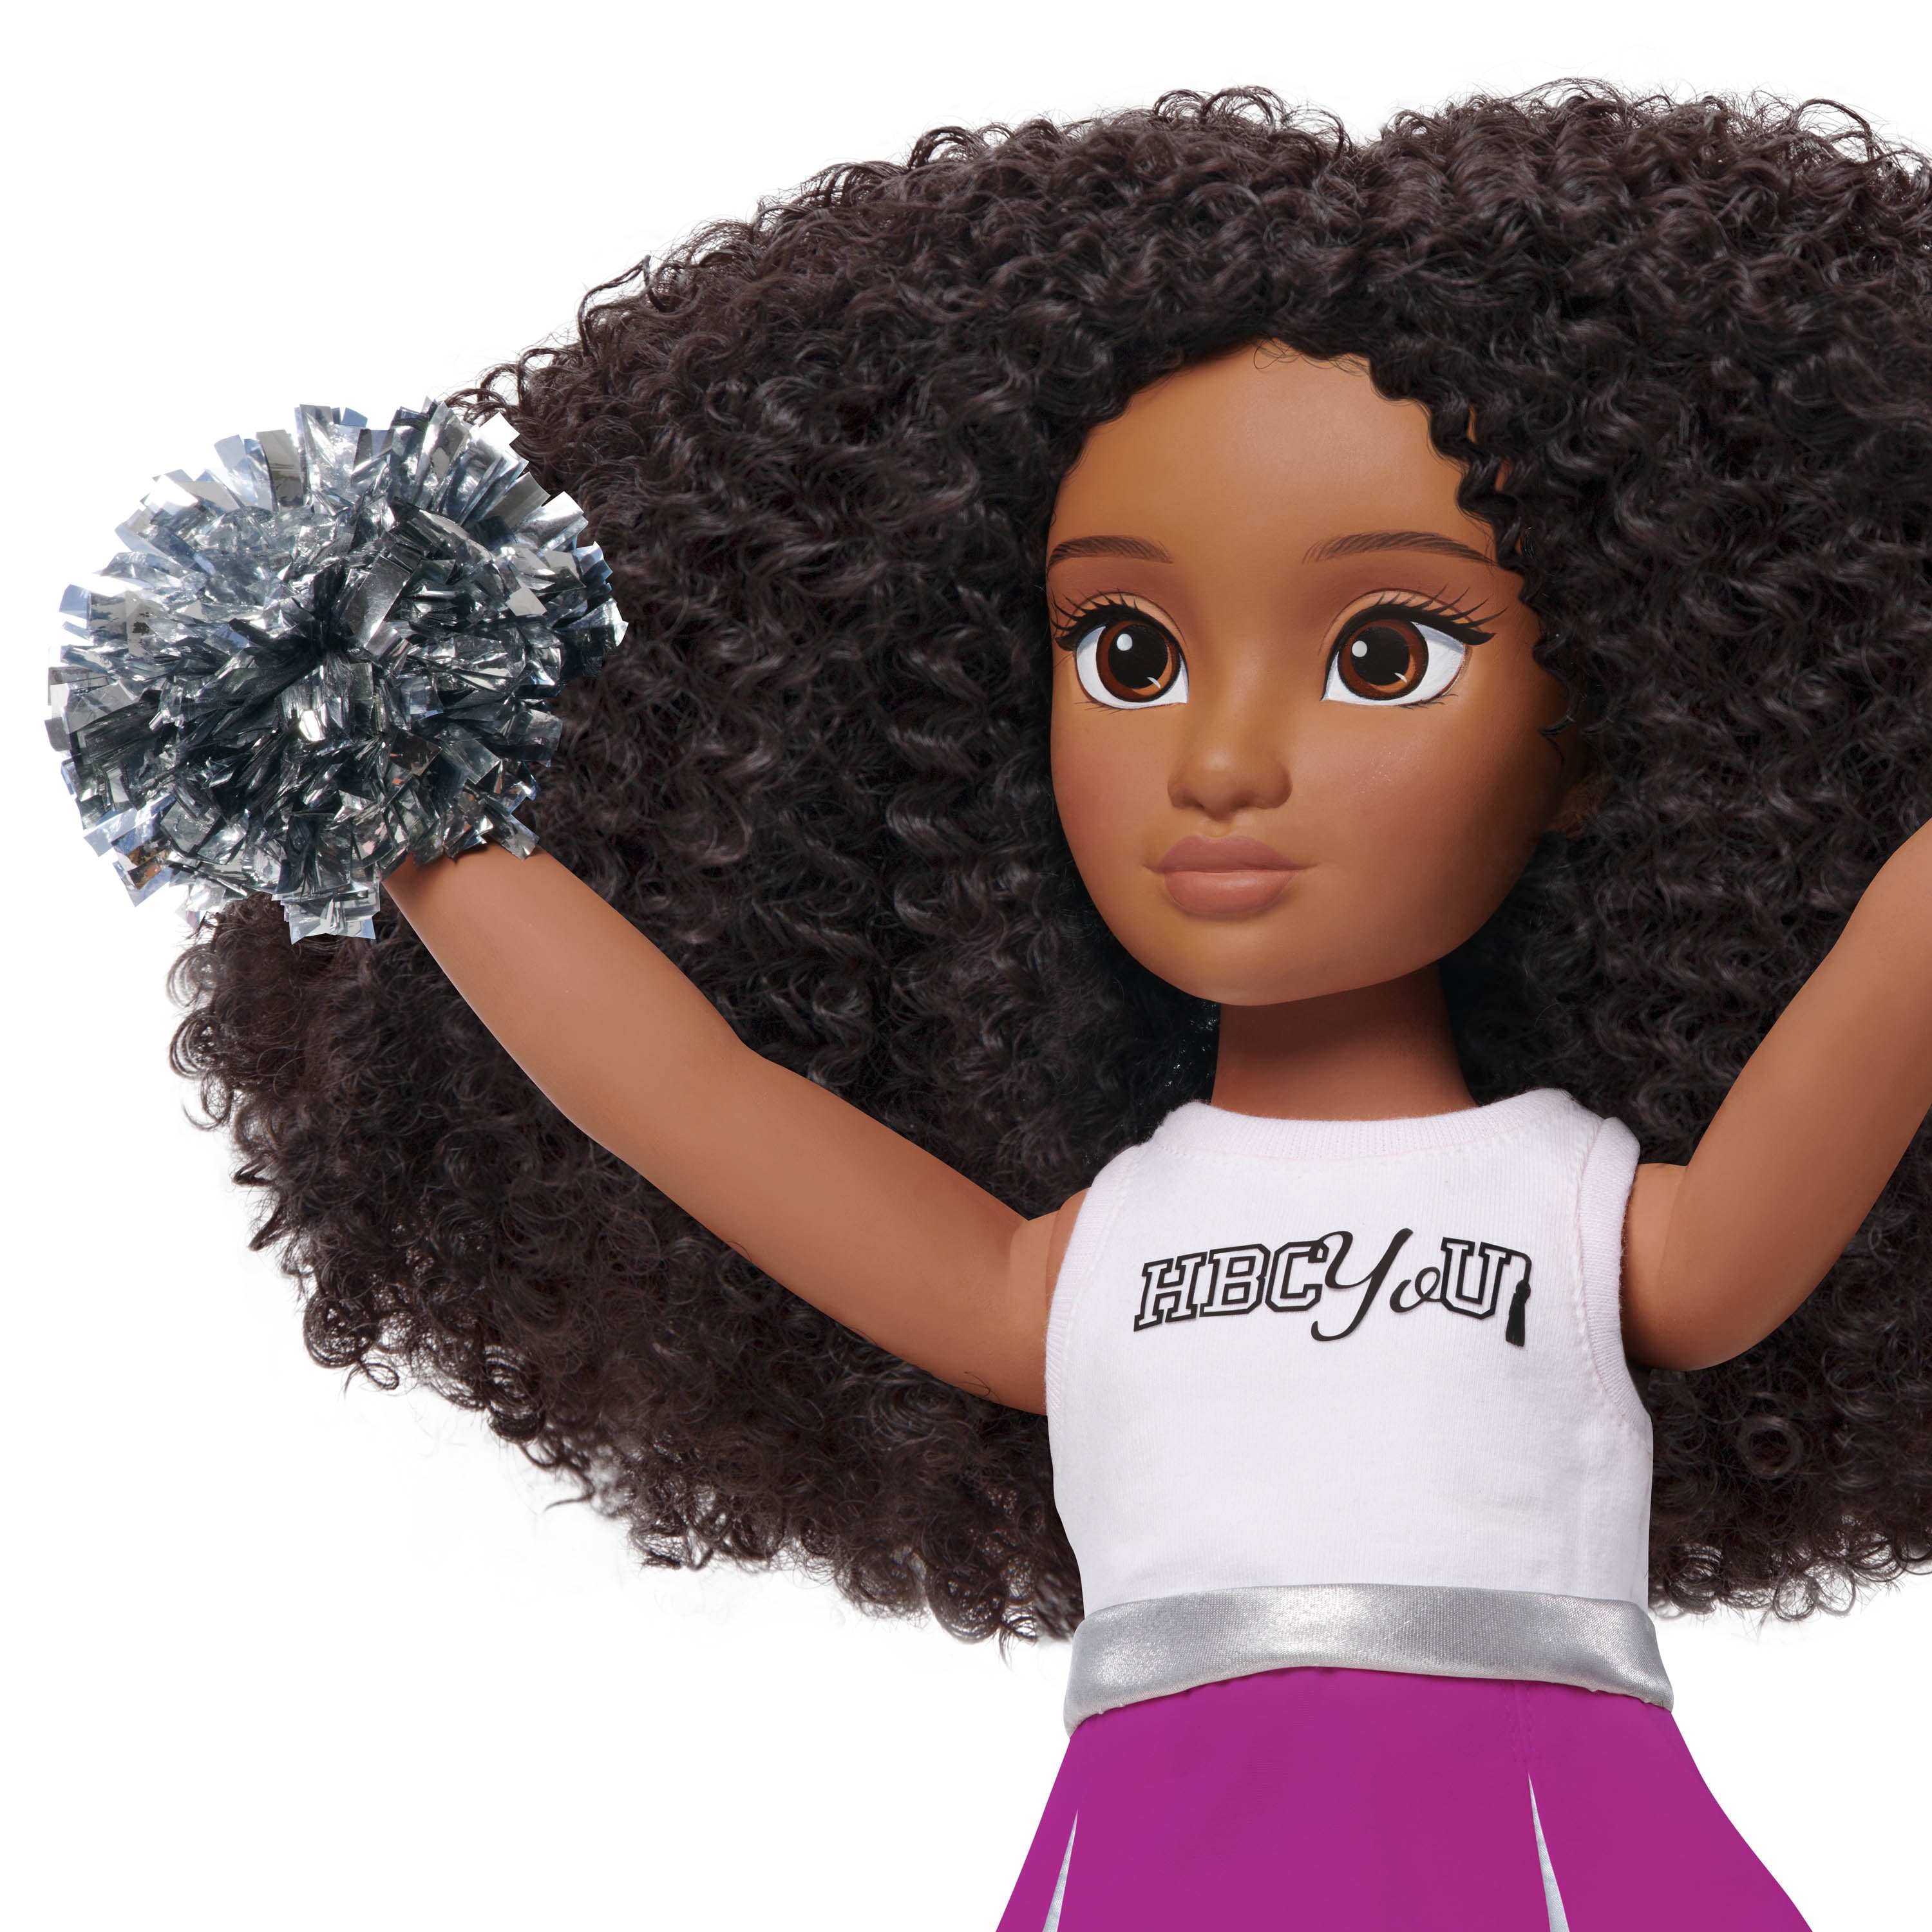 HBCyoU Cheer Captain Alyssa 18-inch Doll & Accessories, Curly Hair, Medium Brown Skin Tone